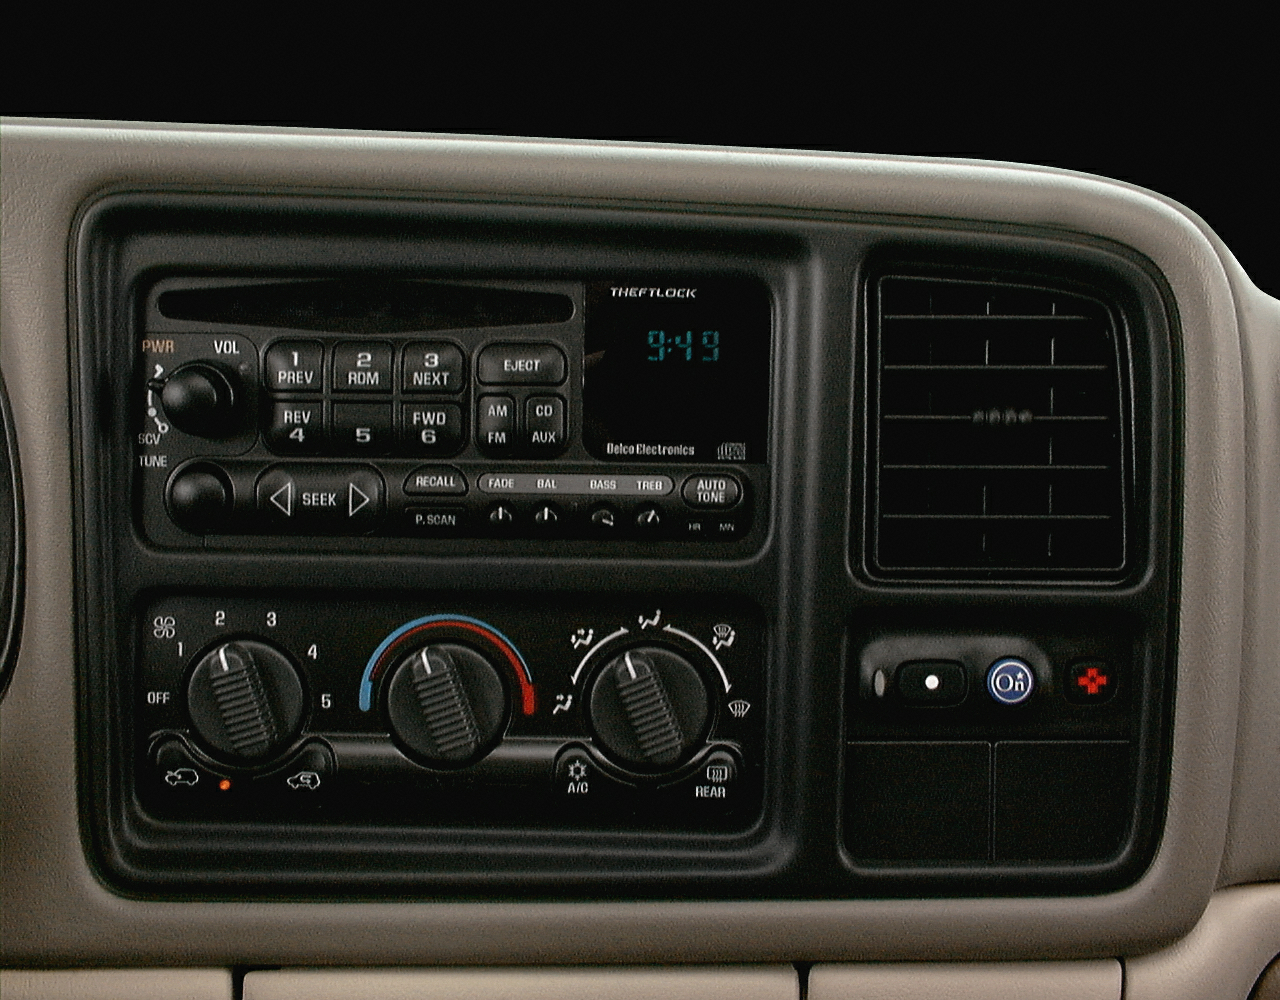 2001 Chevrolet Suburban